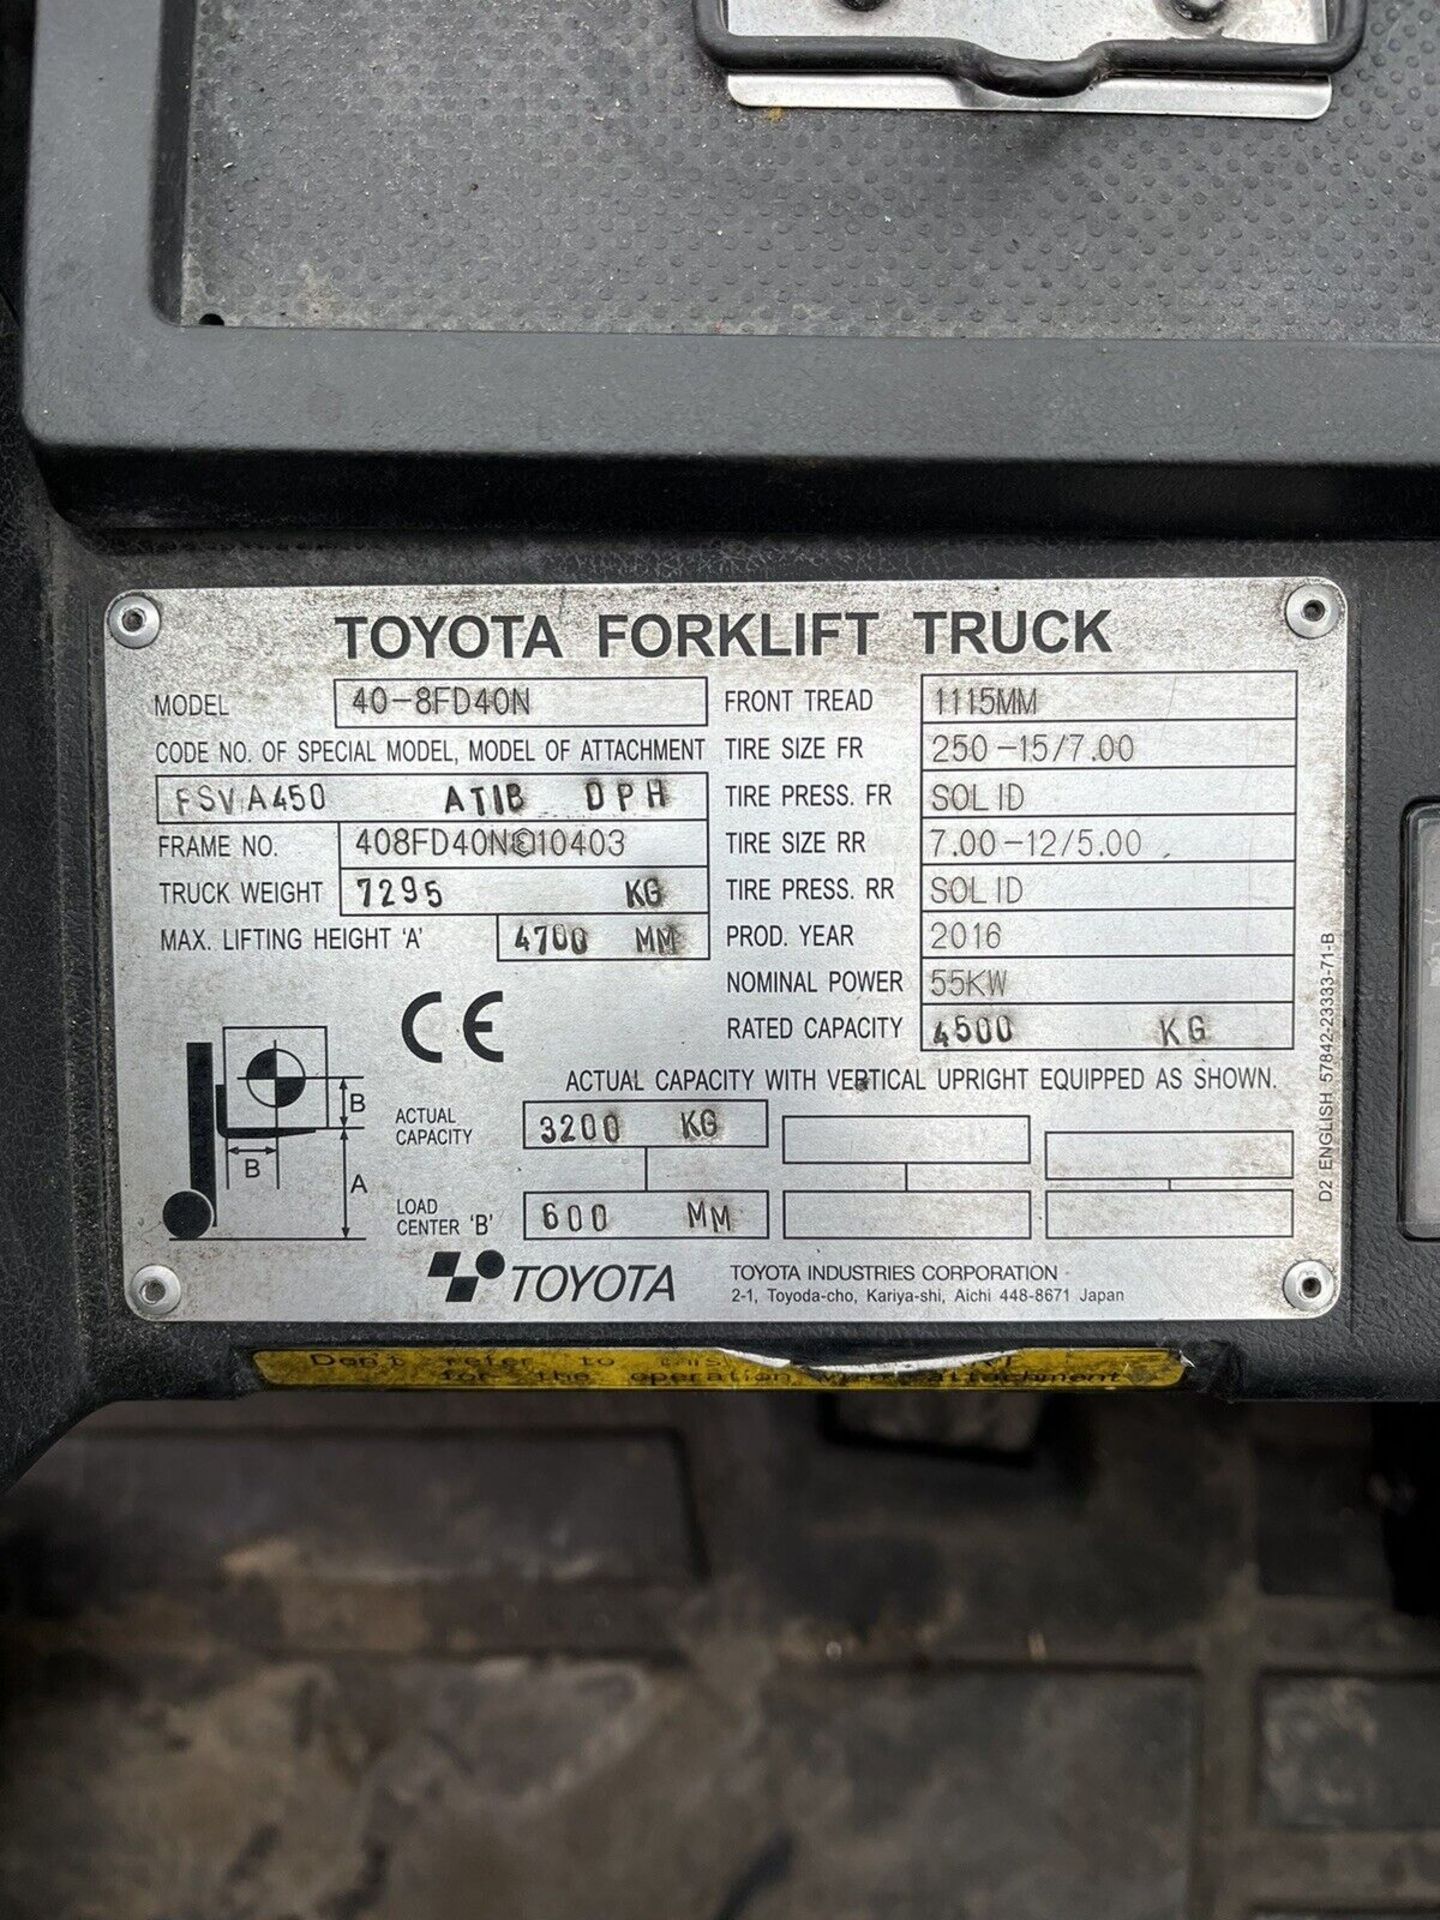 2016 Toyota 40-8FD40N 4 Tonne Diesel Forklift, 4.5 - Image 6 of 8